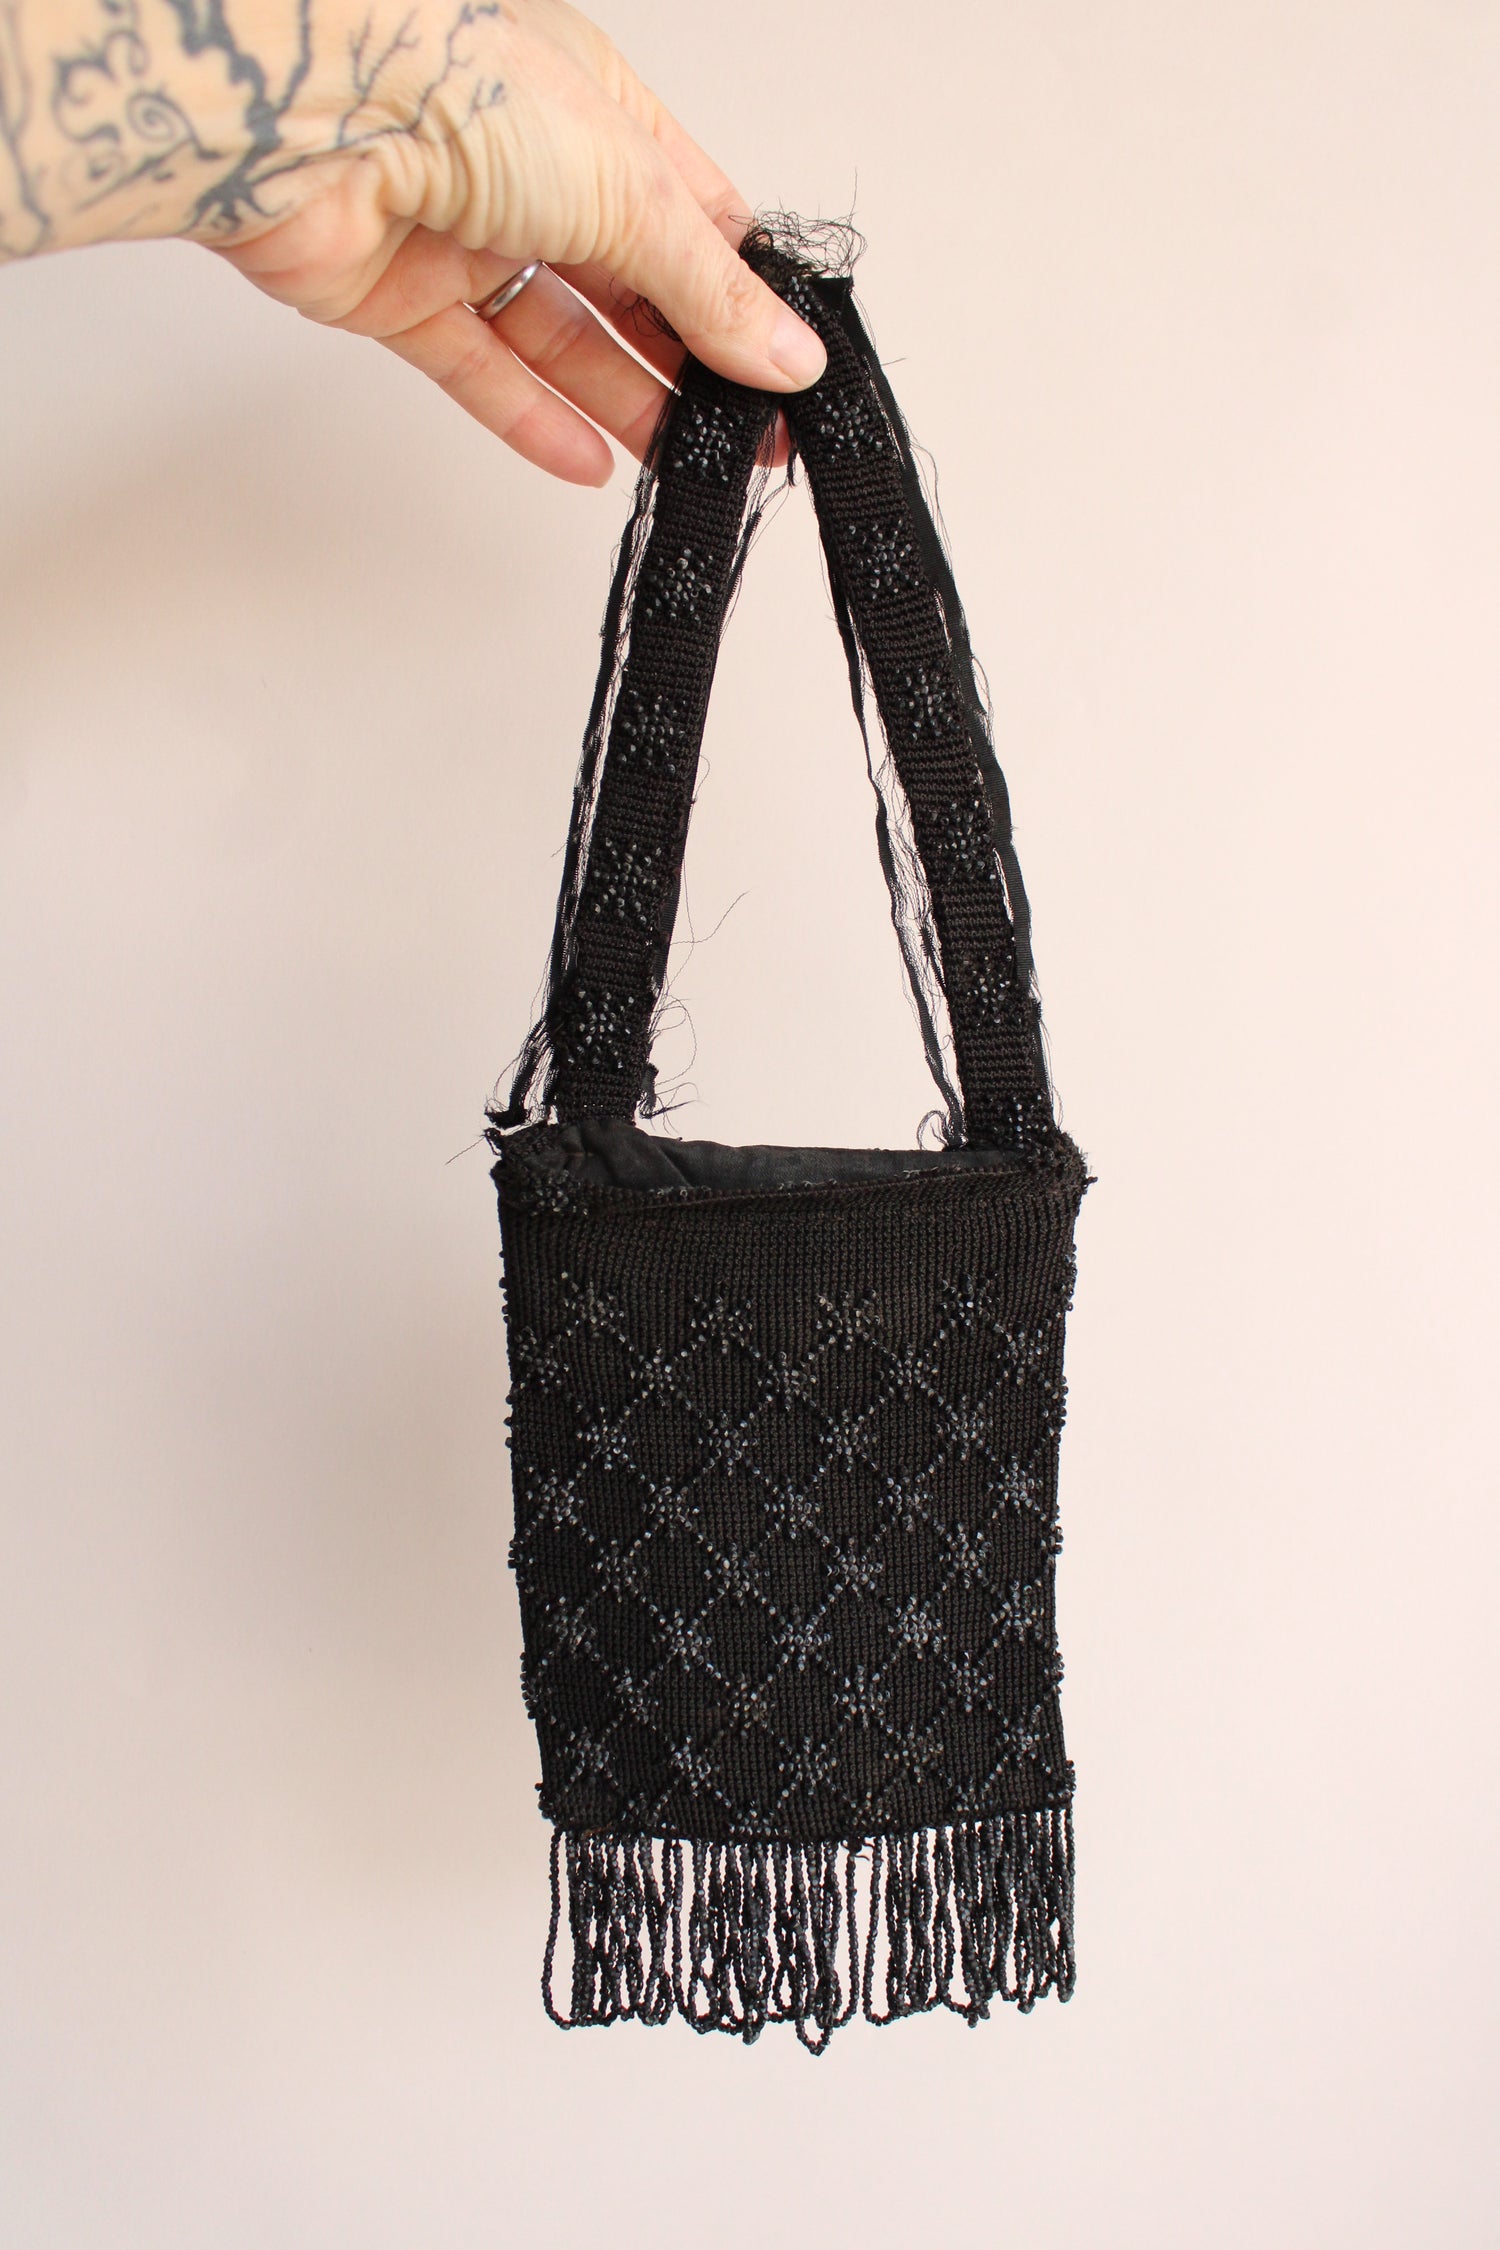 Crystal Tassels Chain Bag Ladies Fashion Mobile Phone Bag Diamonds Black  Small Single Crossbody Bags Pu Leather Womens Handbag - AliExpress